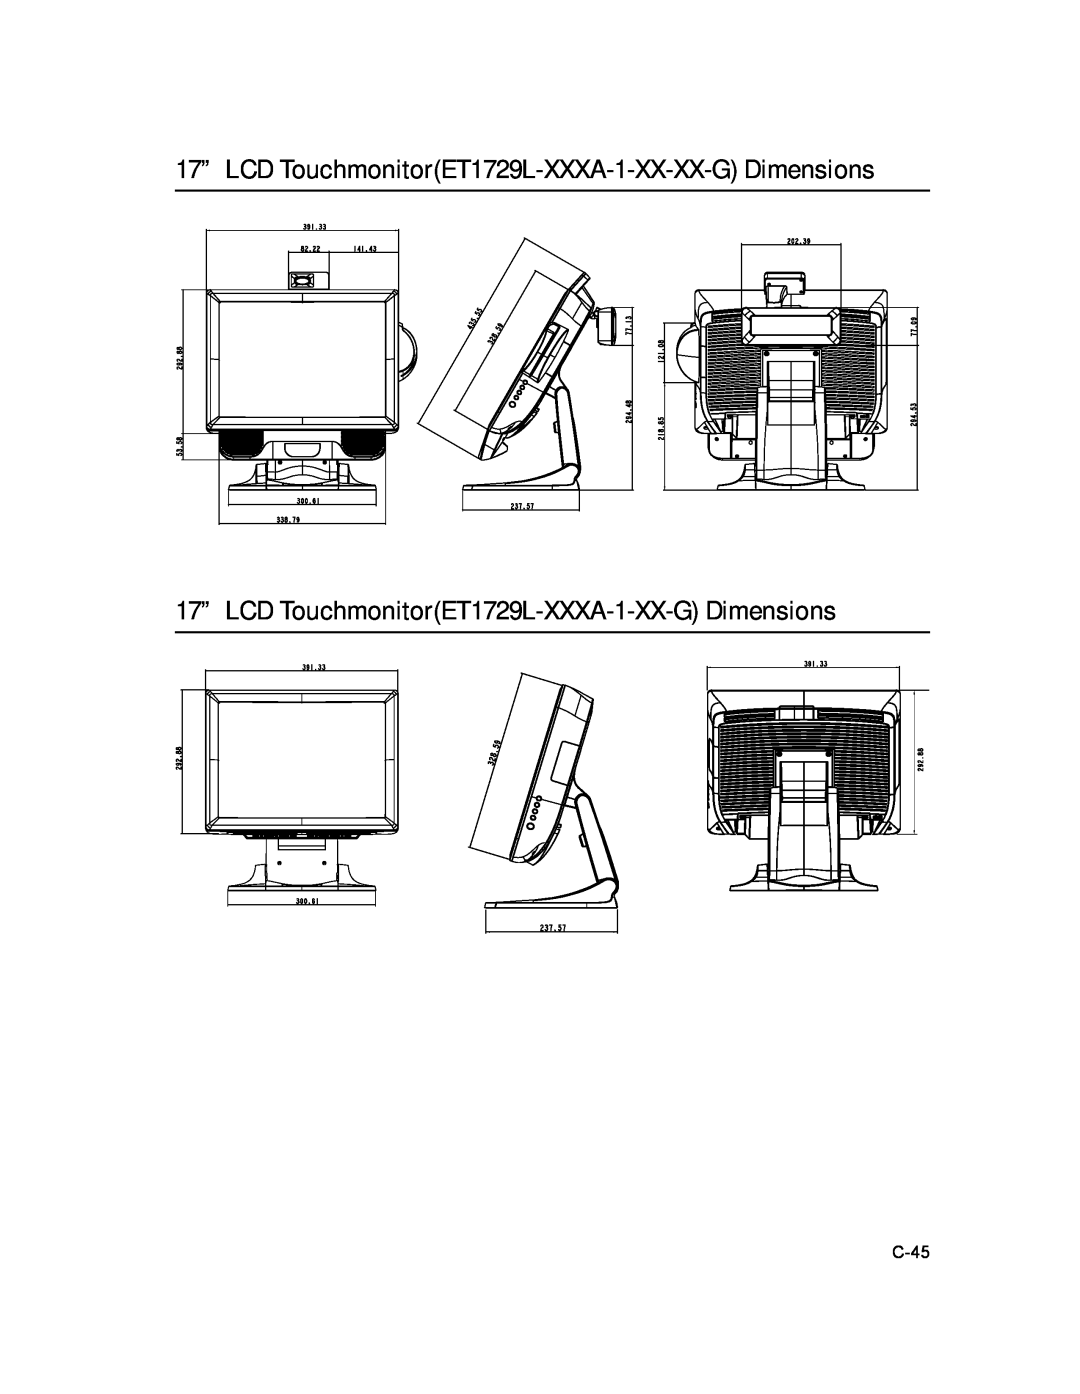 Elo TouchSystems manual 17” LCD TouchmonitorET1729L-XXXA-1-XX-XX-G Dimensions, C-45 